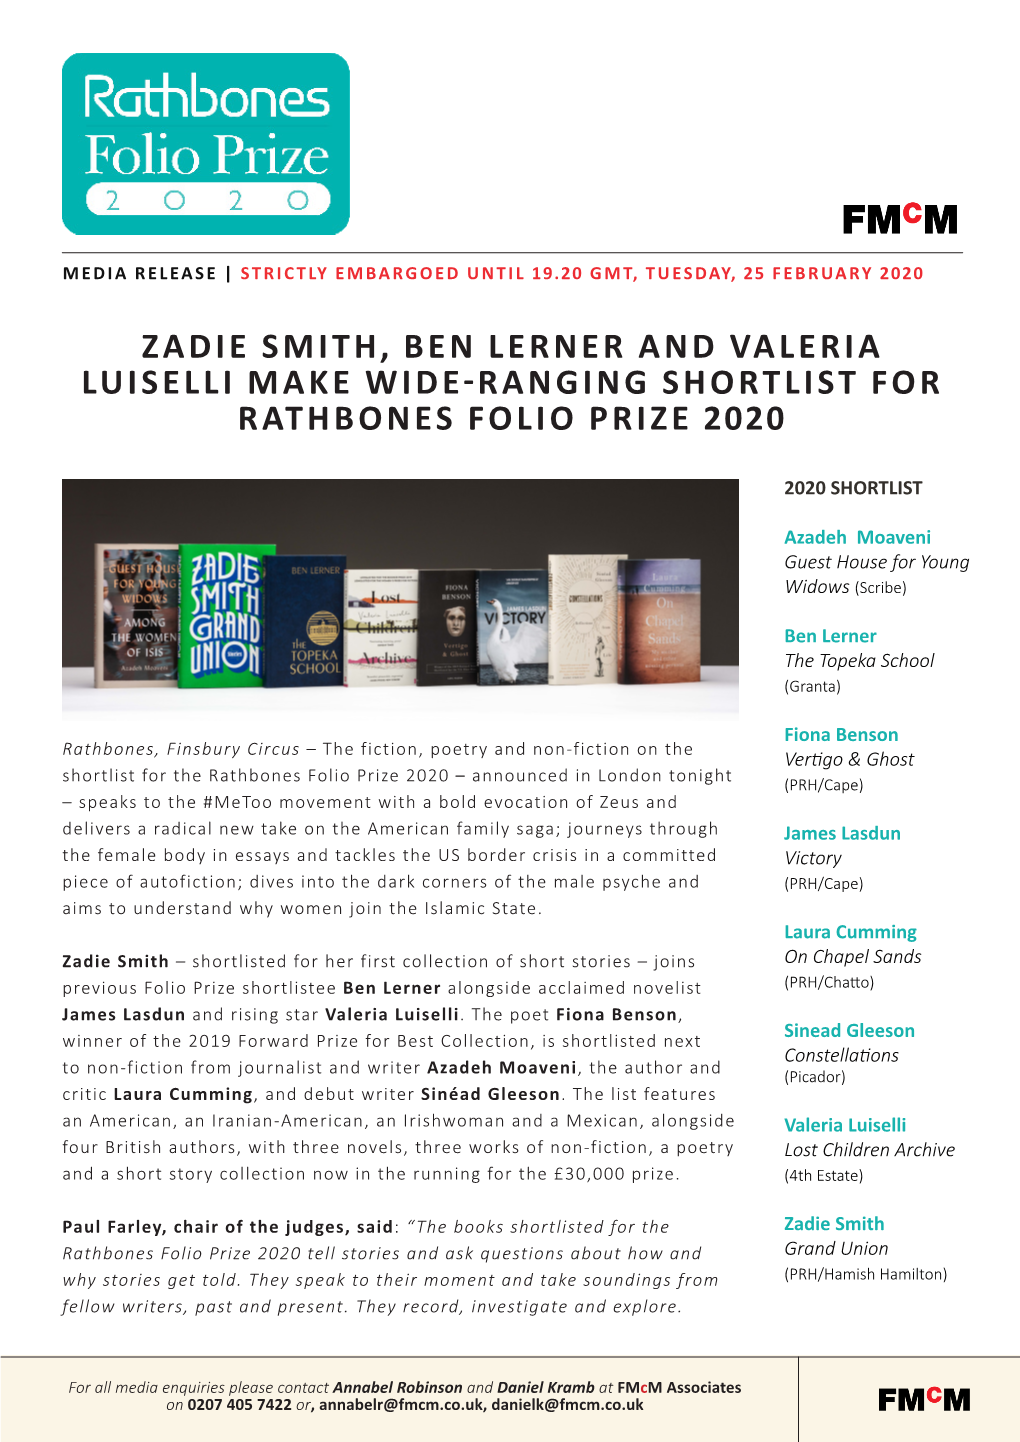 Zadie Smith, Ben Lerner and Valeria Luiselli Make Wide-Ranging Shortlist for Rathbones Folio Prize 2020